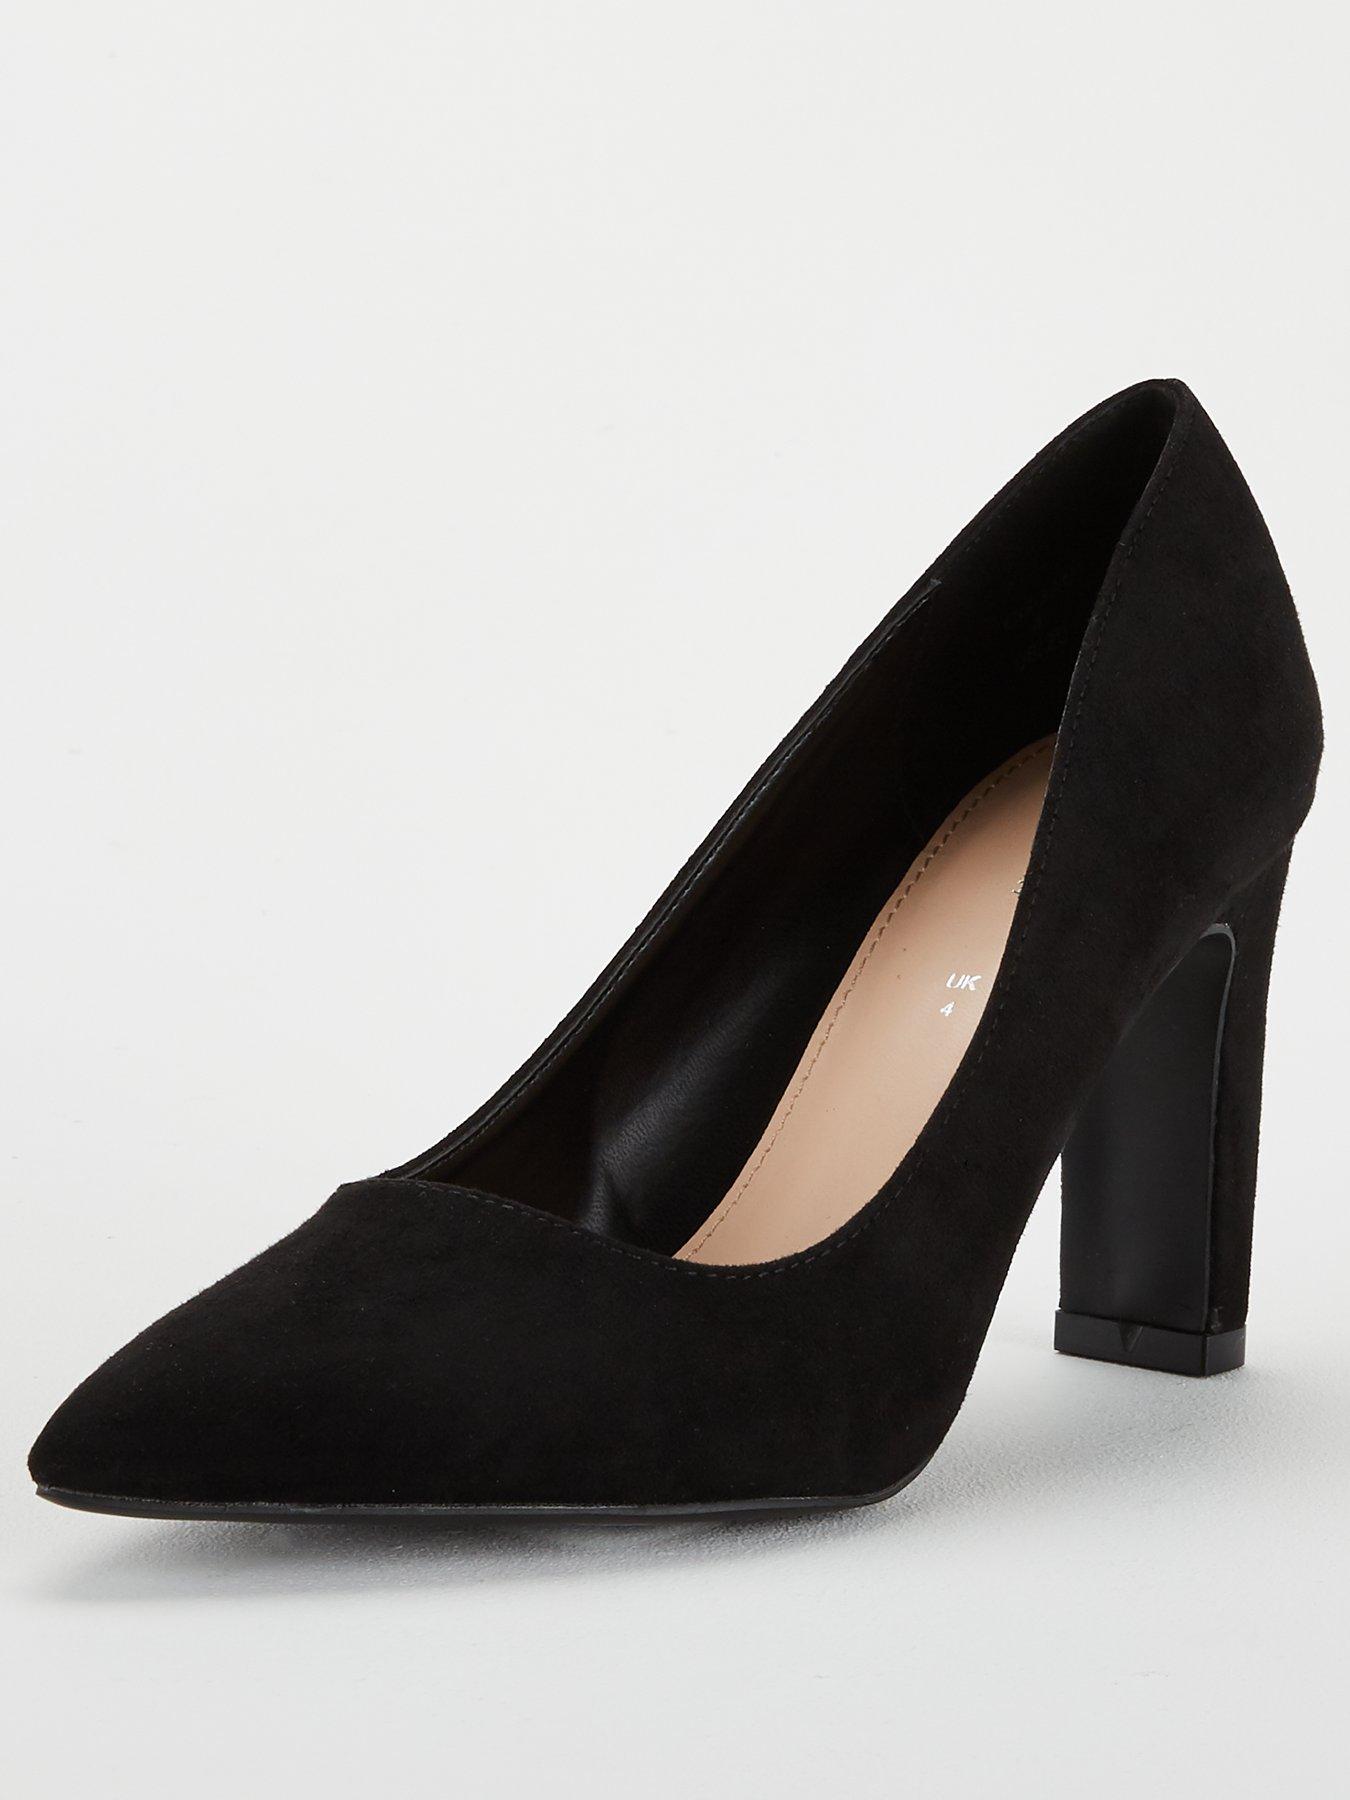 black high heel shoes uk